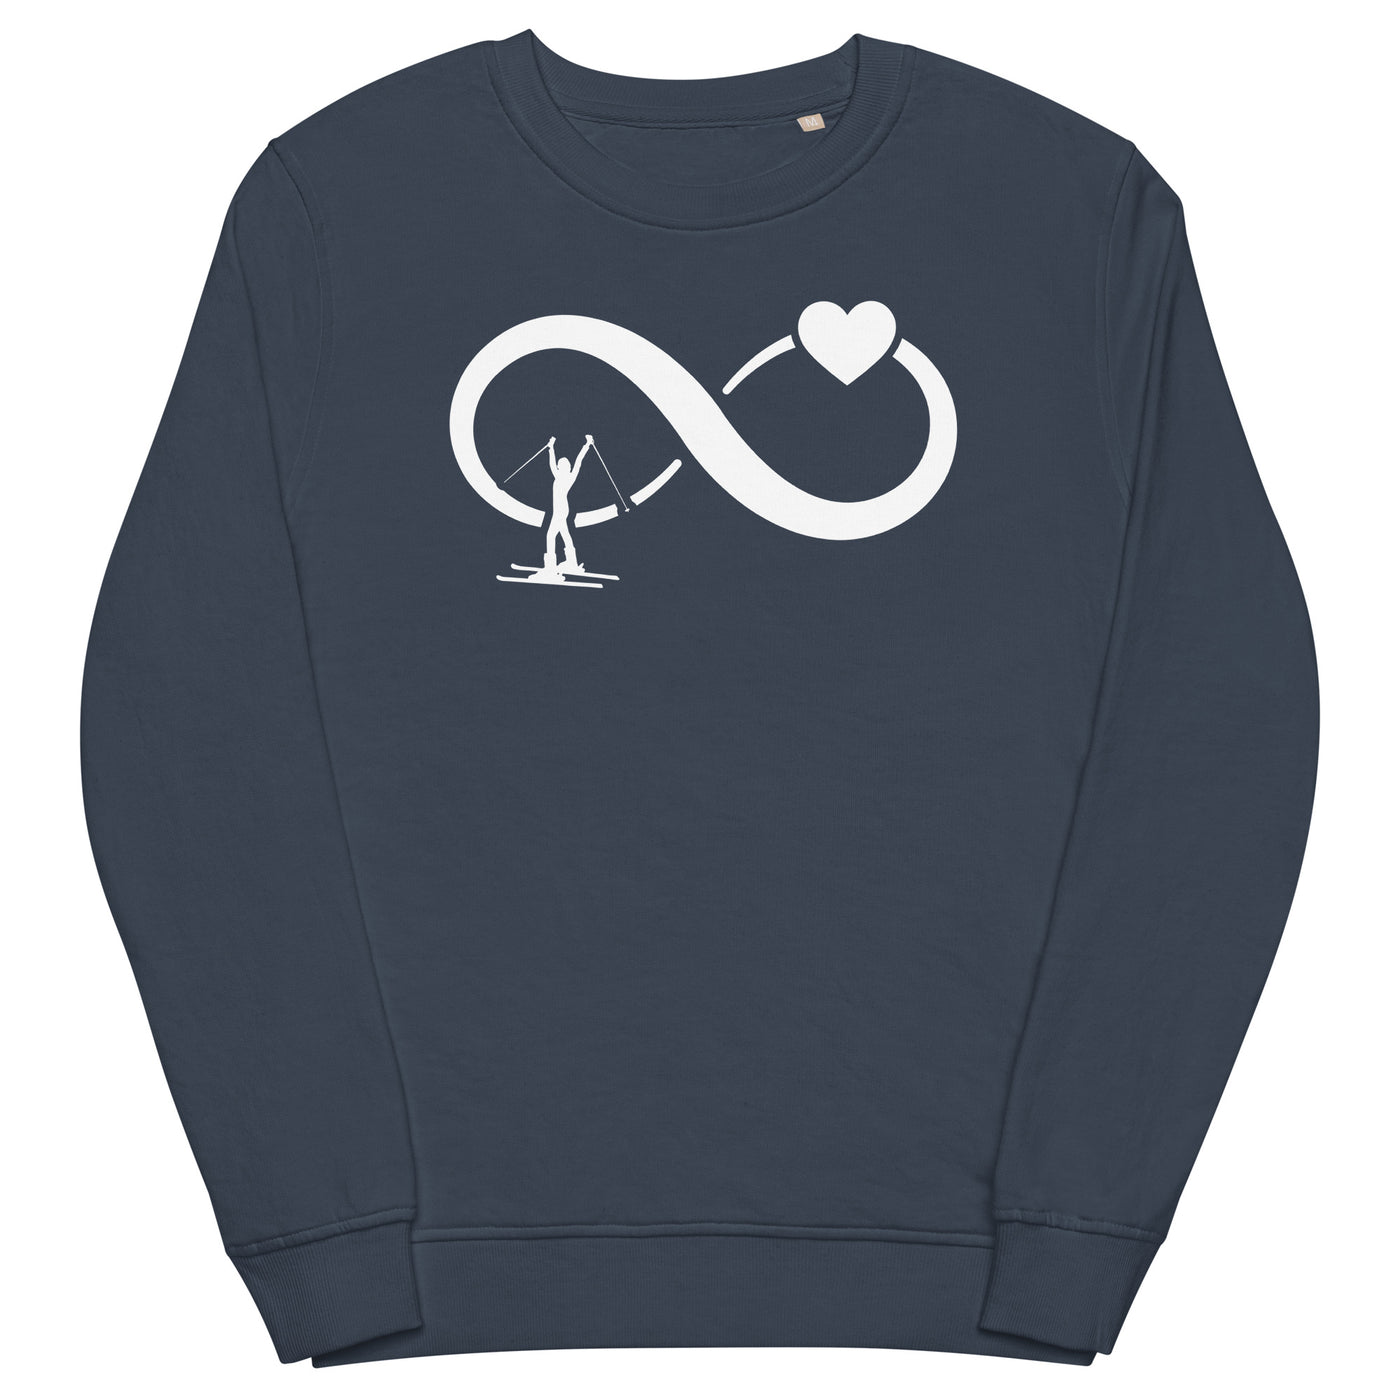 Infinity Heart and Skiing 1 - Unisex Premium Organic Sweatshirt klettern ski xxx yyy zzz French Navy